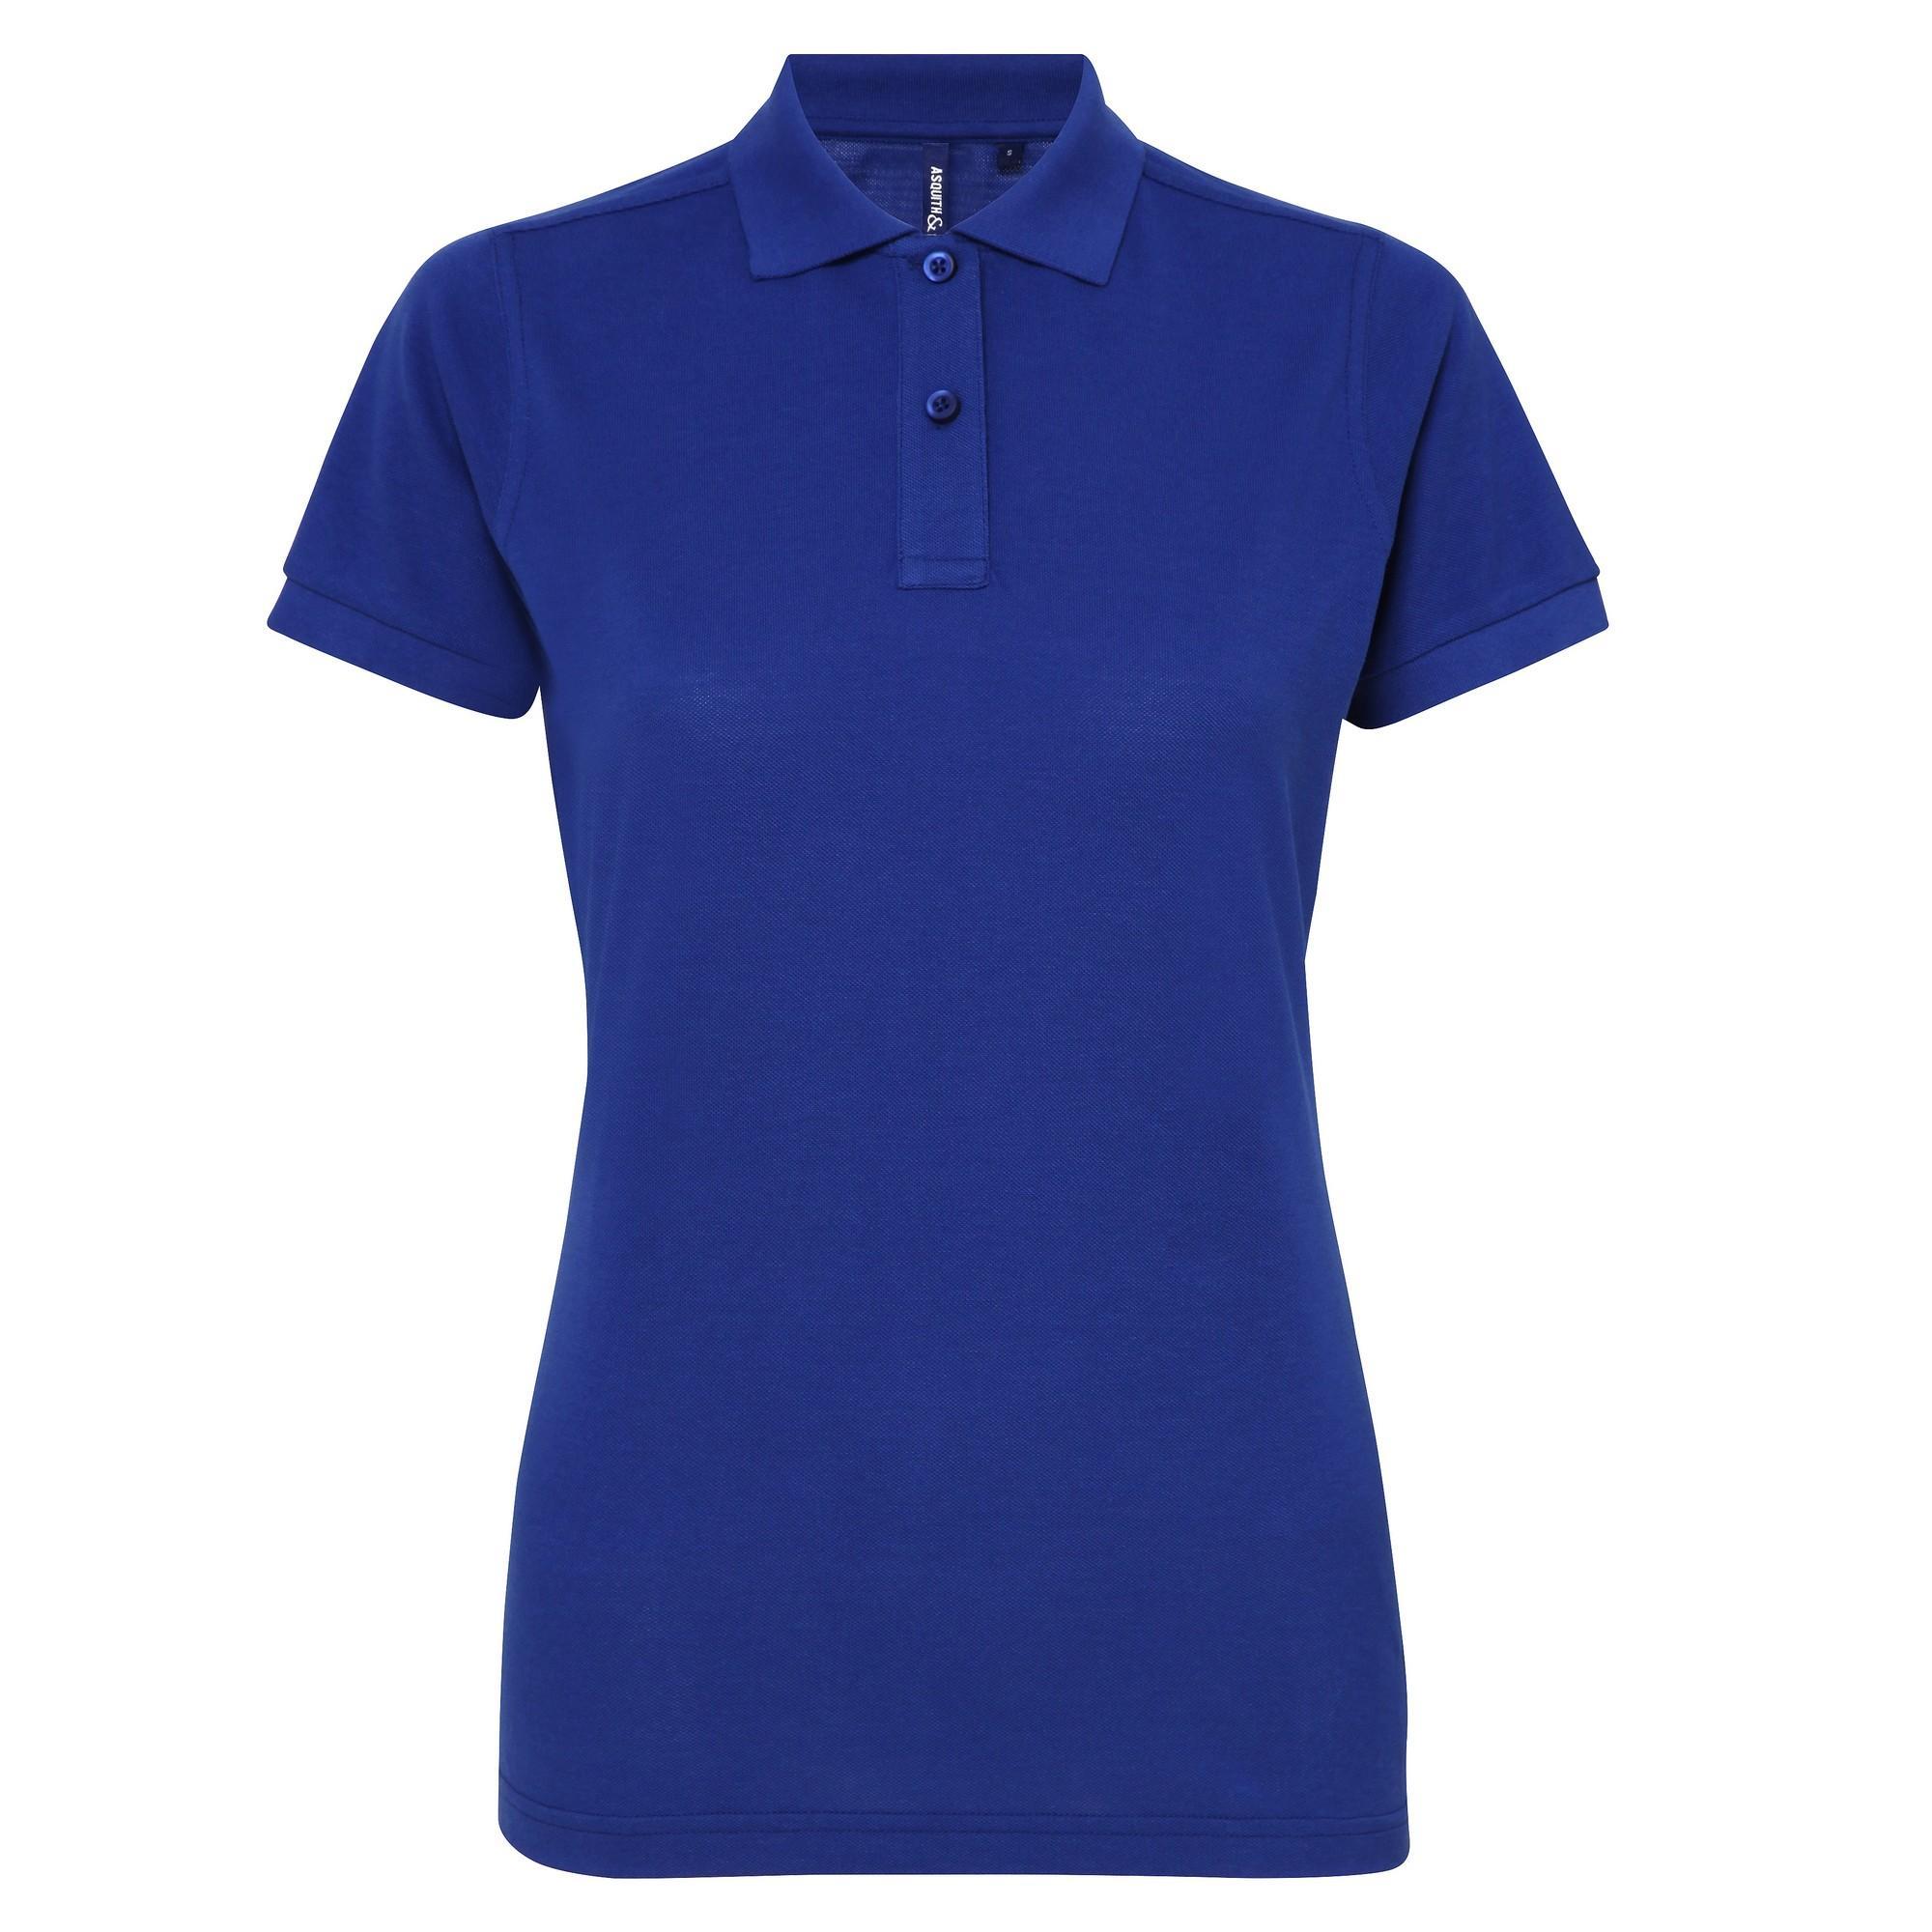 Asquith & Fox Womens/Ladies Short Sleeve Performance Blend Polo Shirt (Royal) (XS)